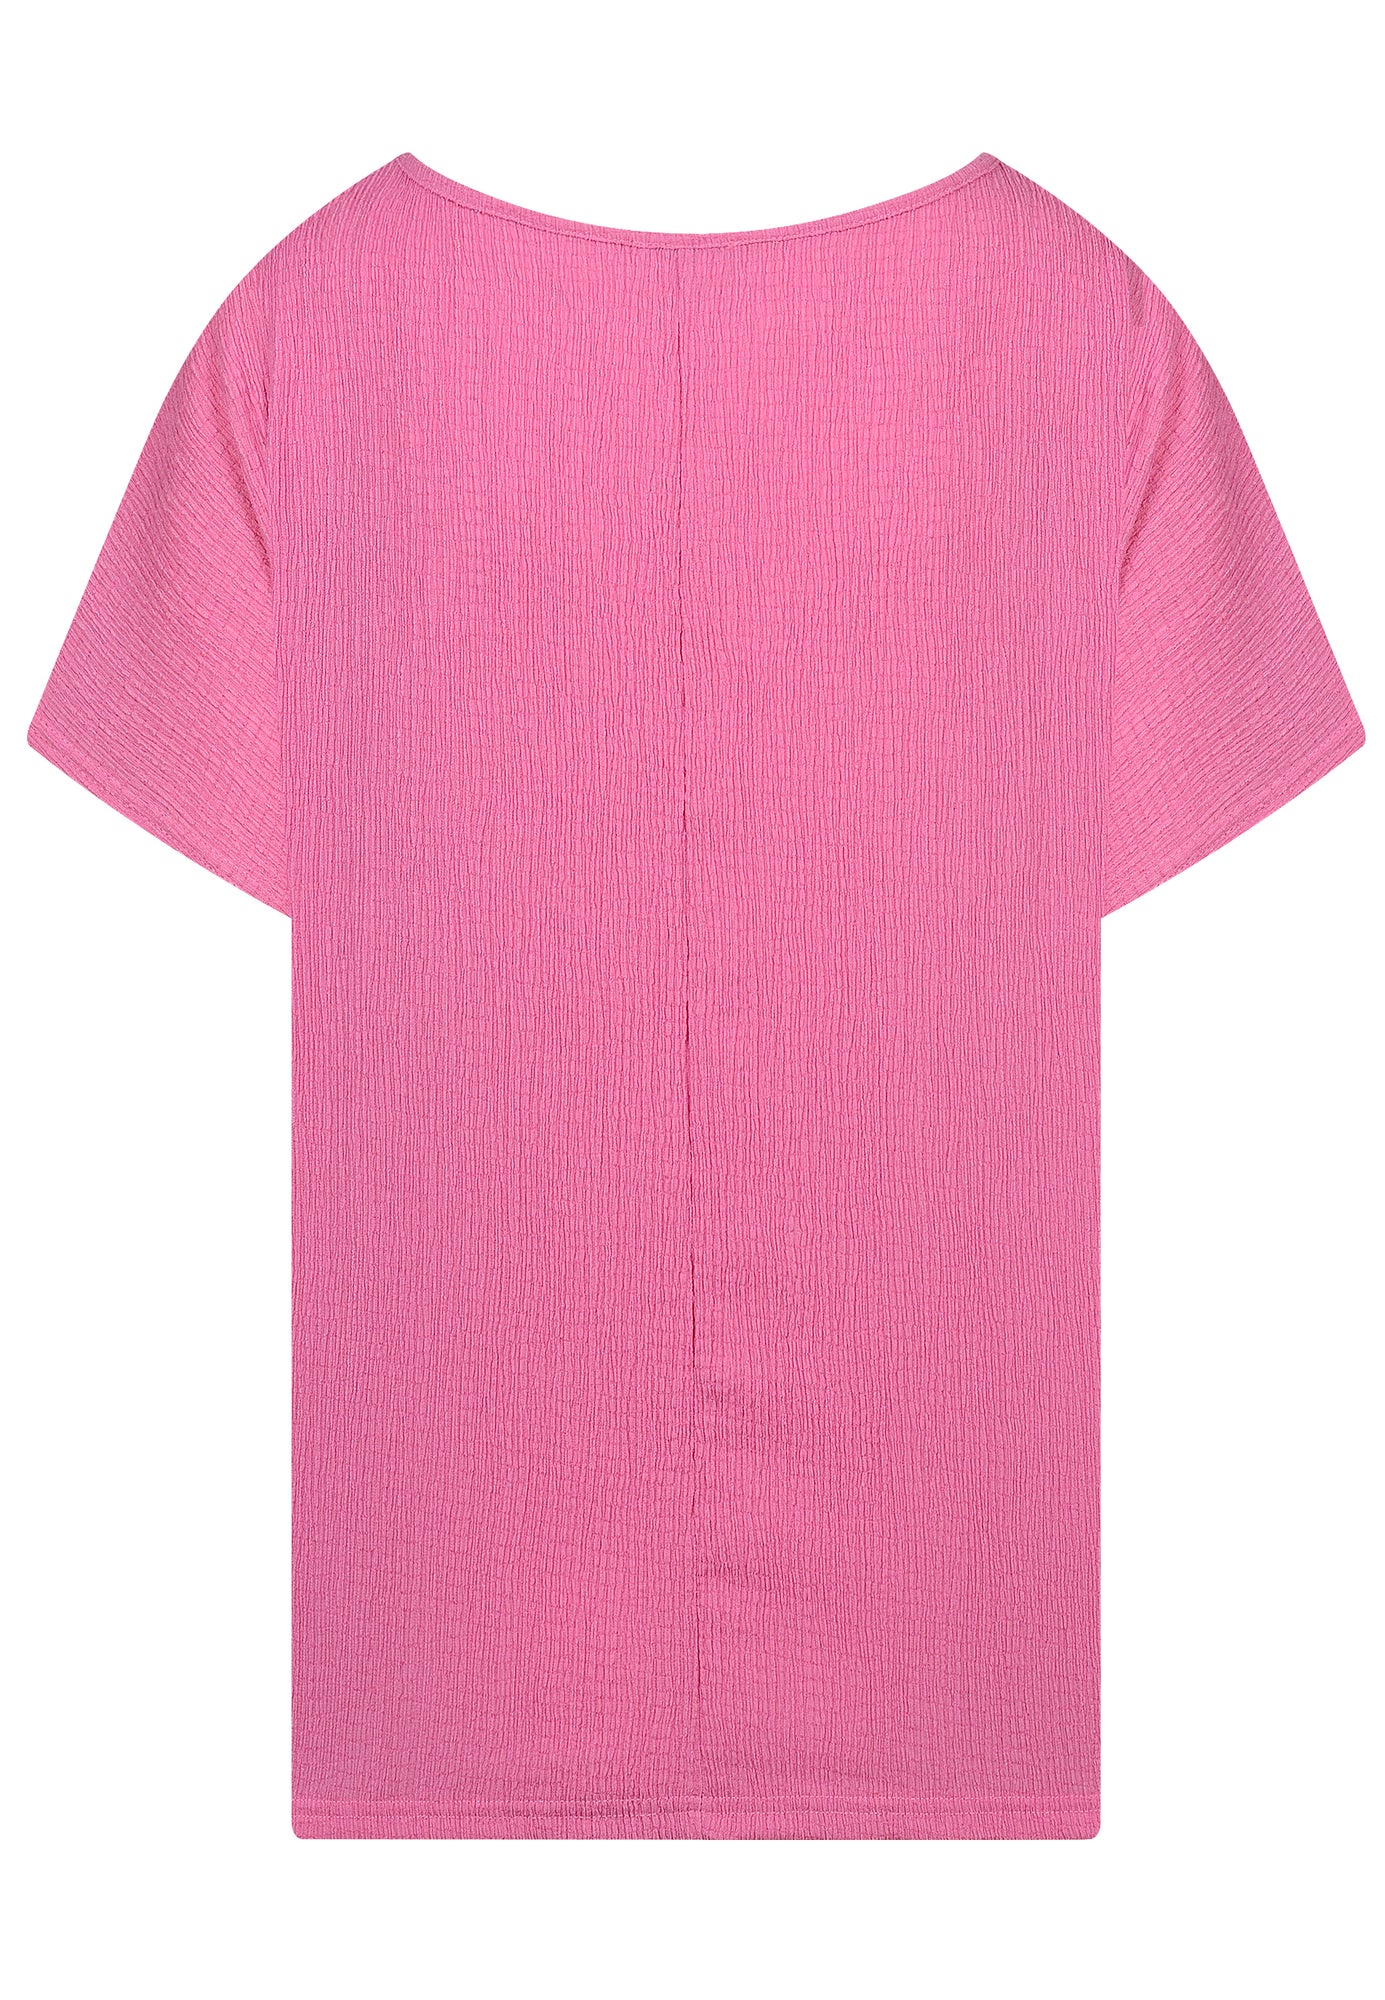 24215 Shirt Crinkle - 09/pink